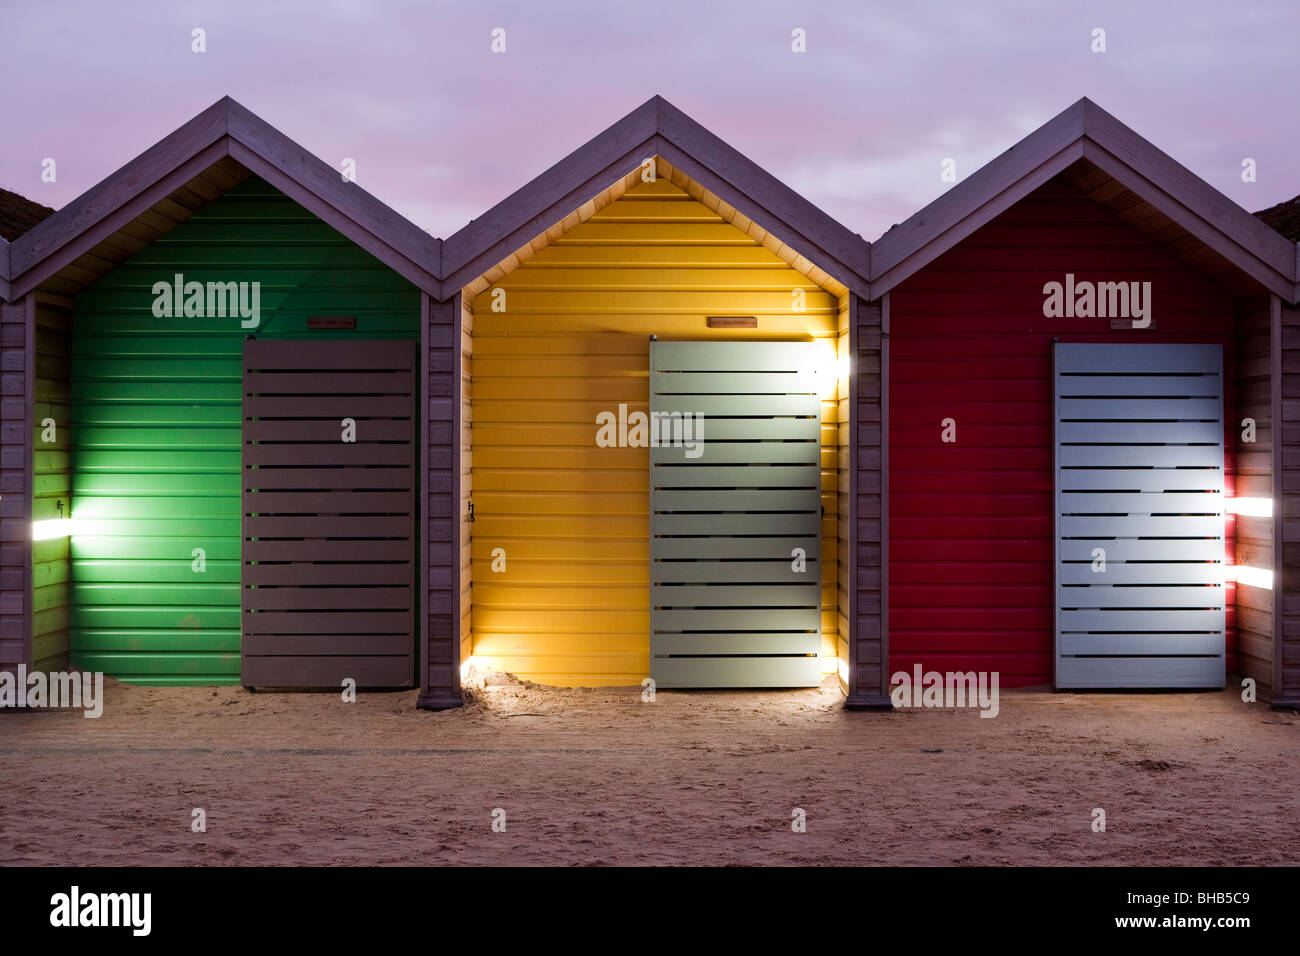 Cabines de plage, plage de Blyth, le Northumberland. United Kingdom. UK Banque D'Images